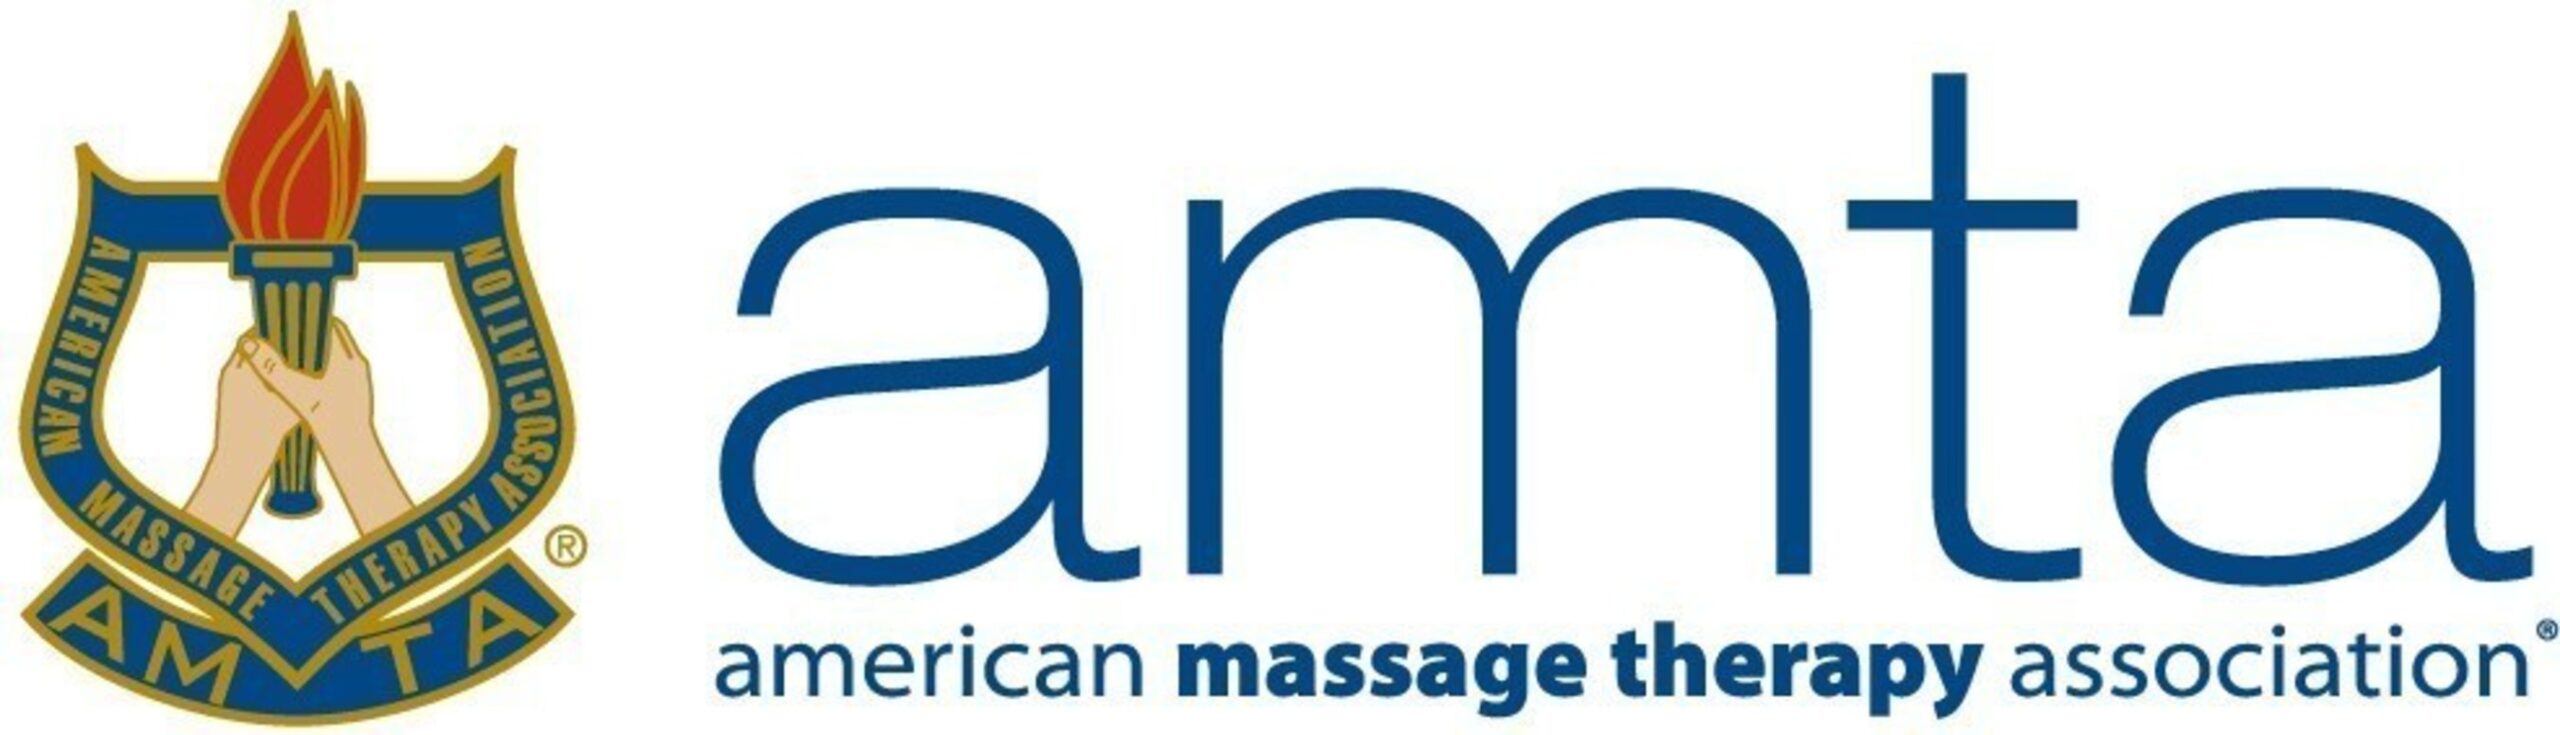 American Massage Therapy Association logo (PRNewsFoto/American Massage Therapy Associa)